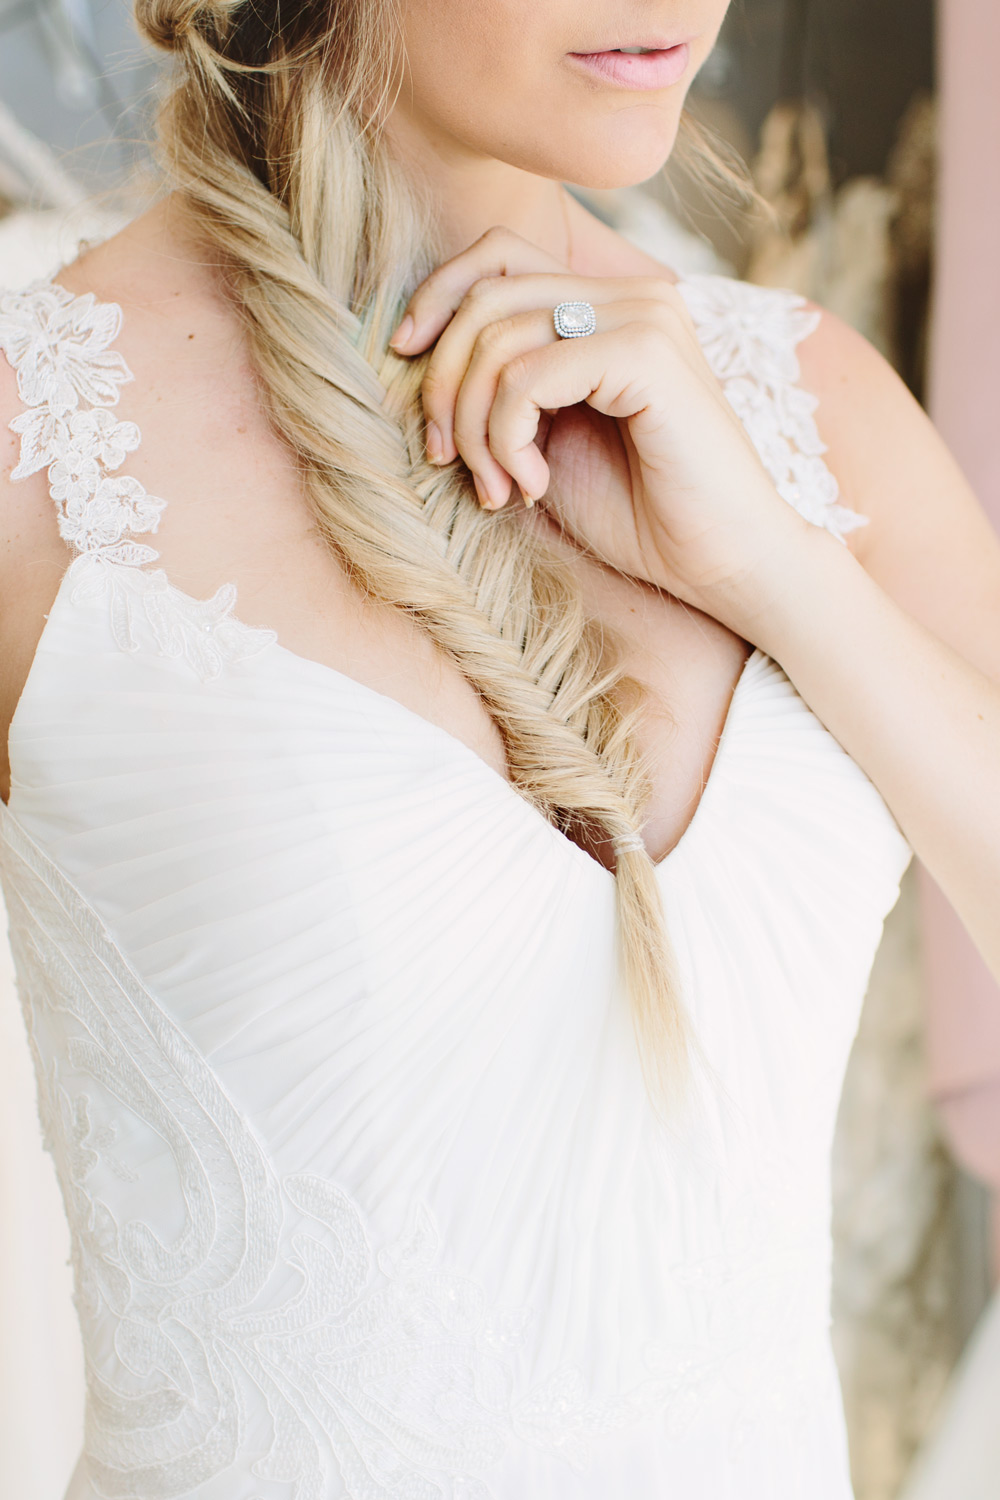 dash of darling caitlin lindquist fishtail braid blonde hair wedding gown